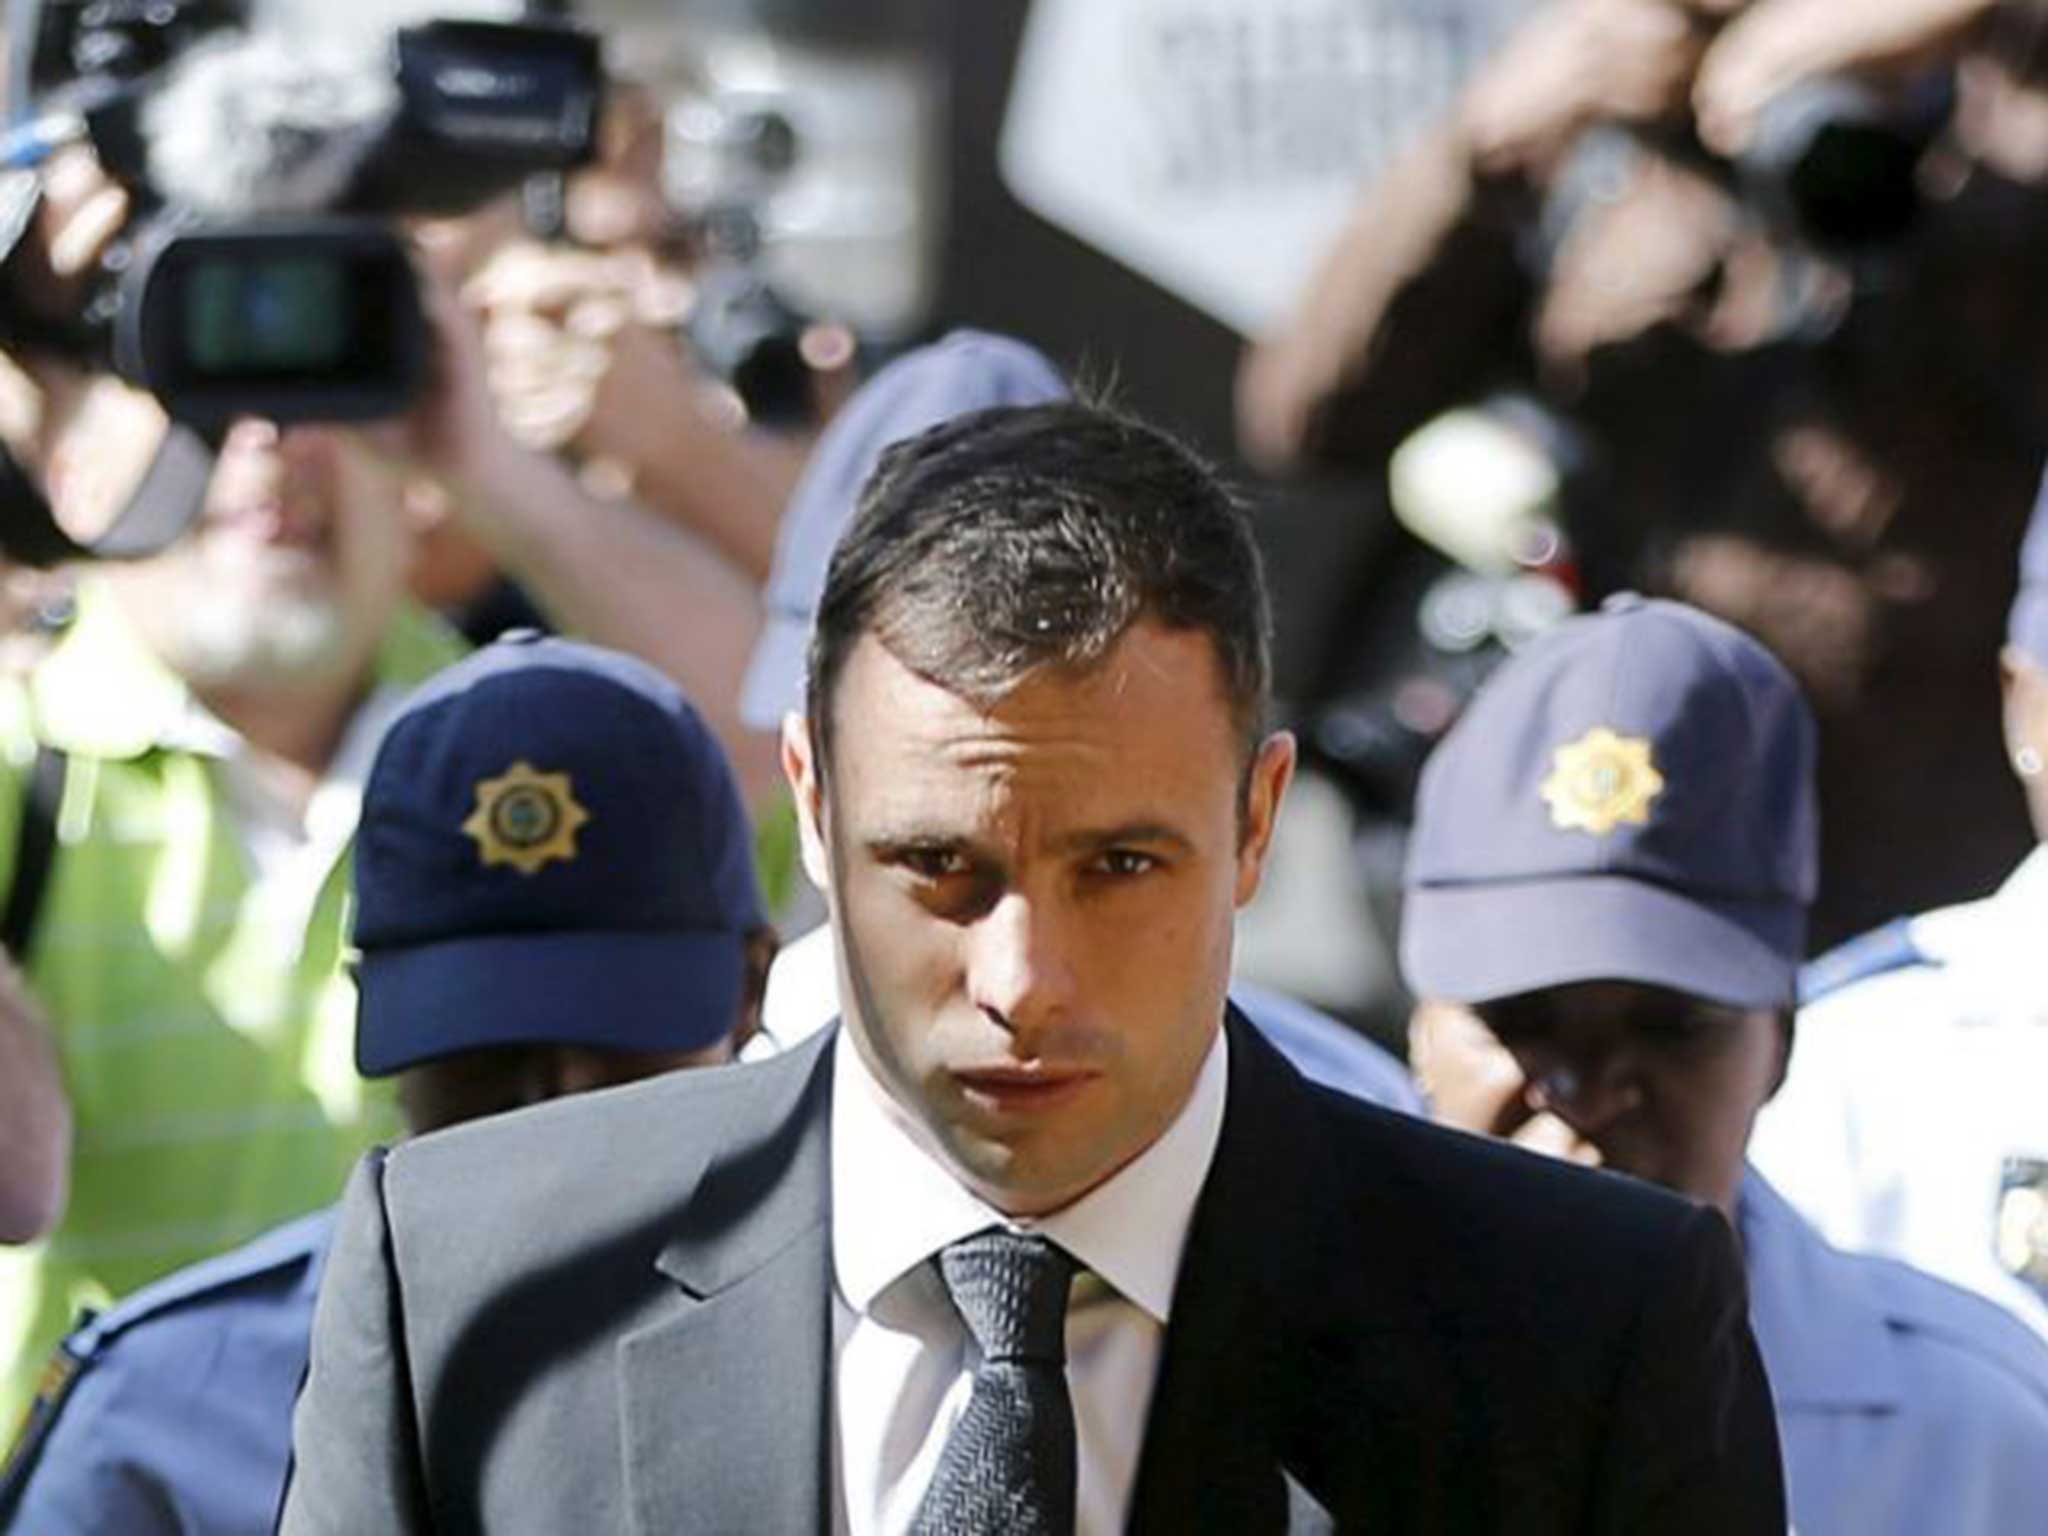 Pistorius was convicted of culpable homicide